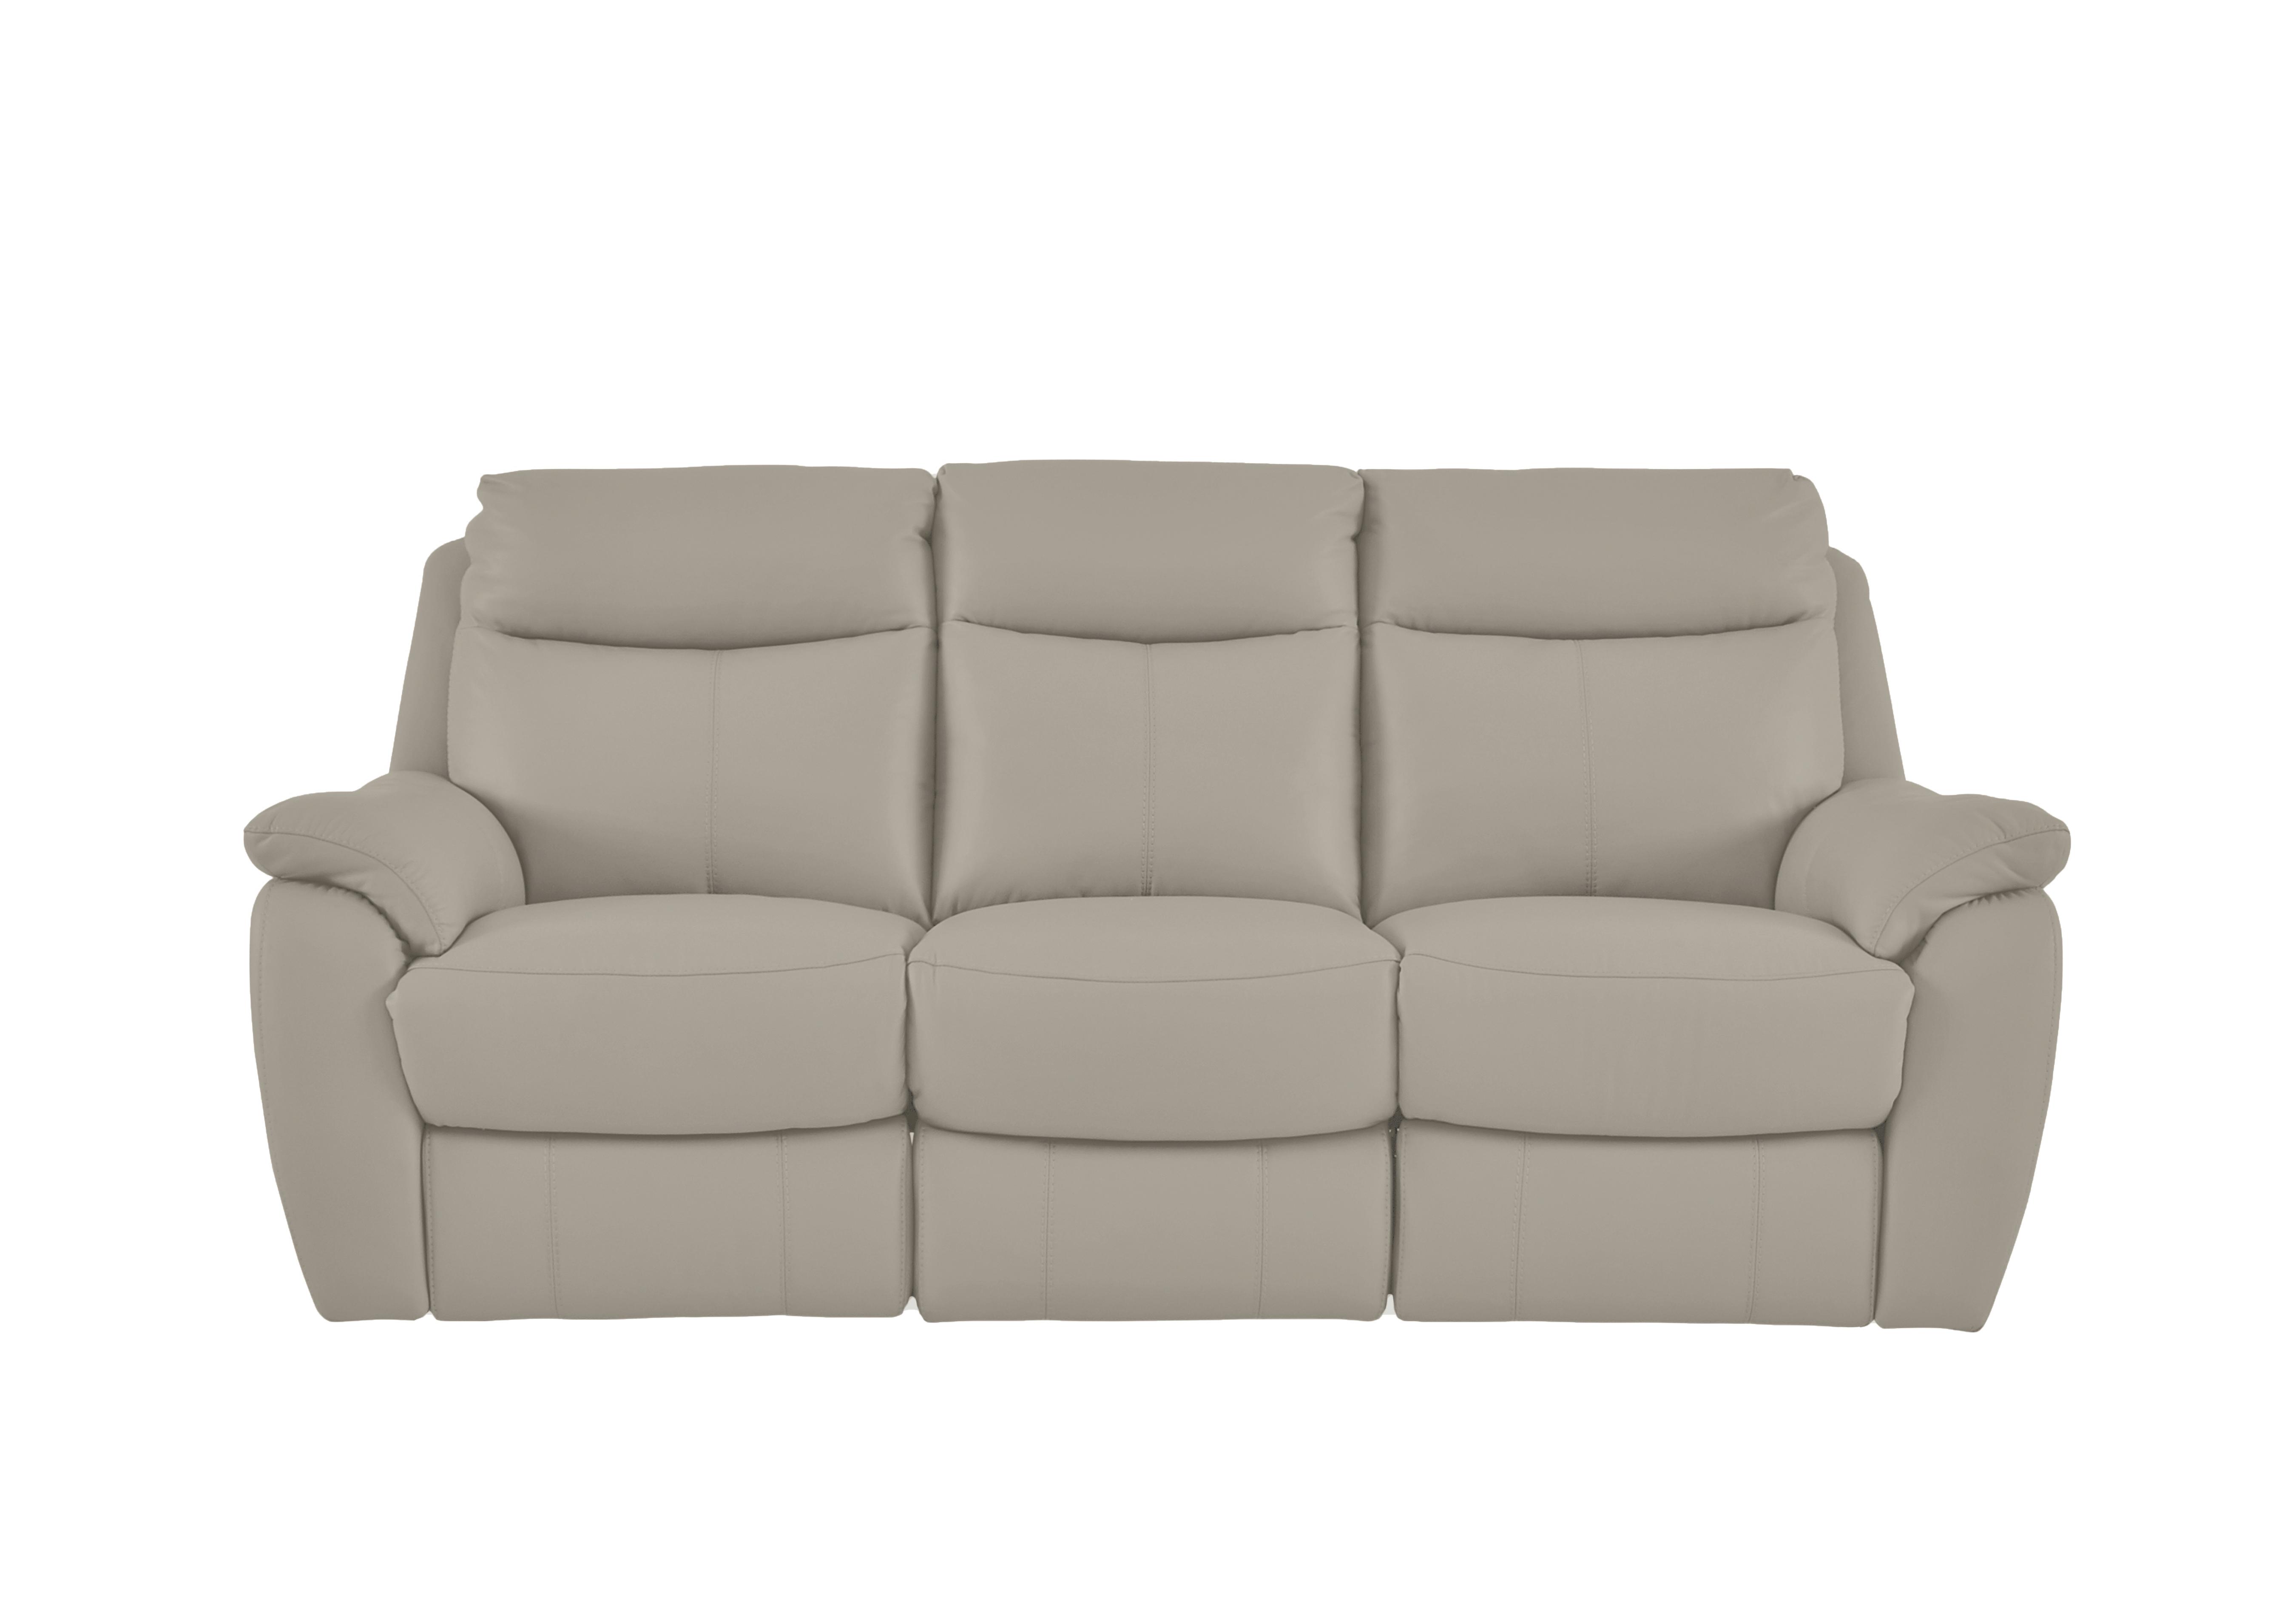 Snug 3 Seater Leather Sofa in Bv-946b Silver Grey on Furniture Village